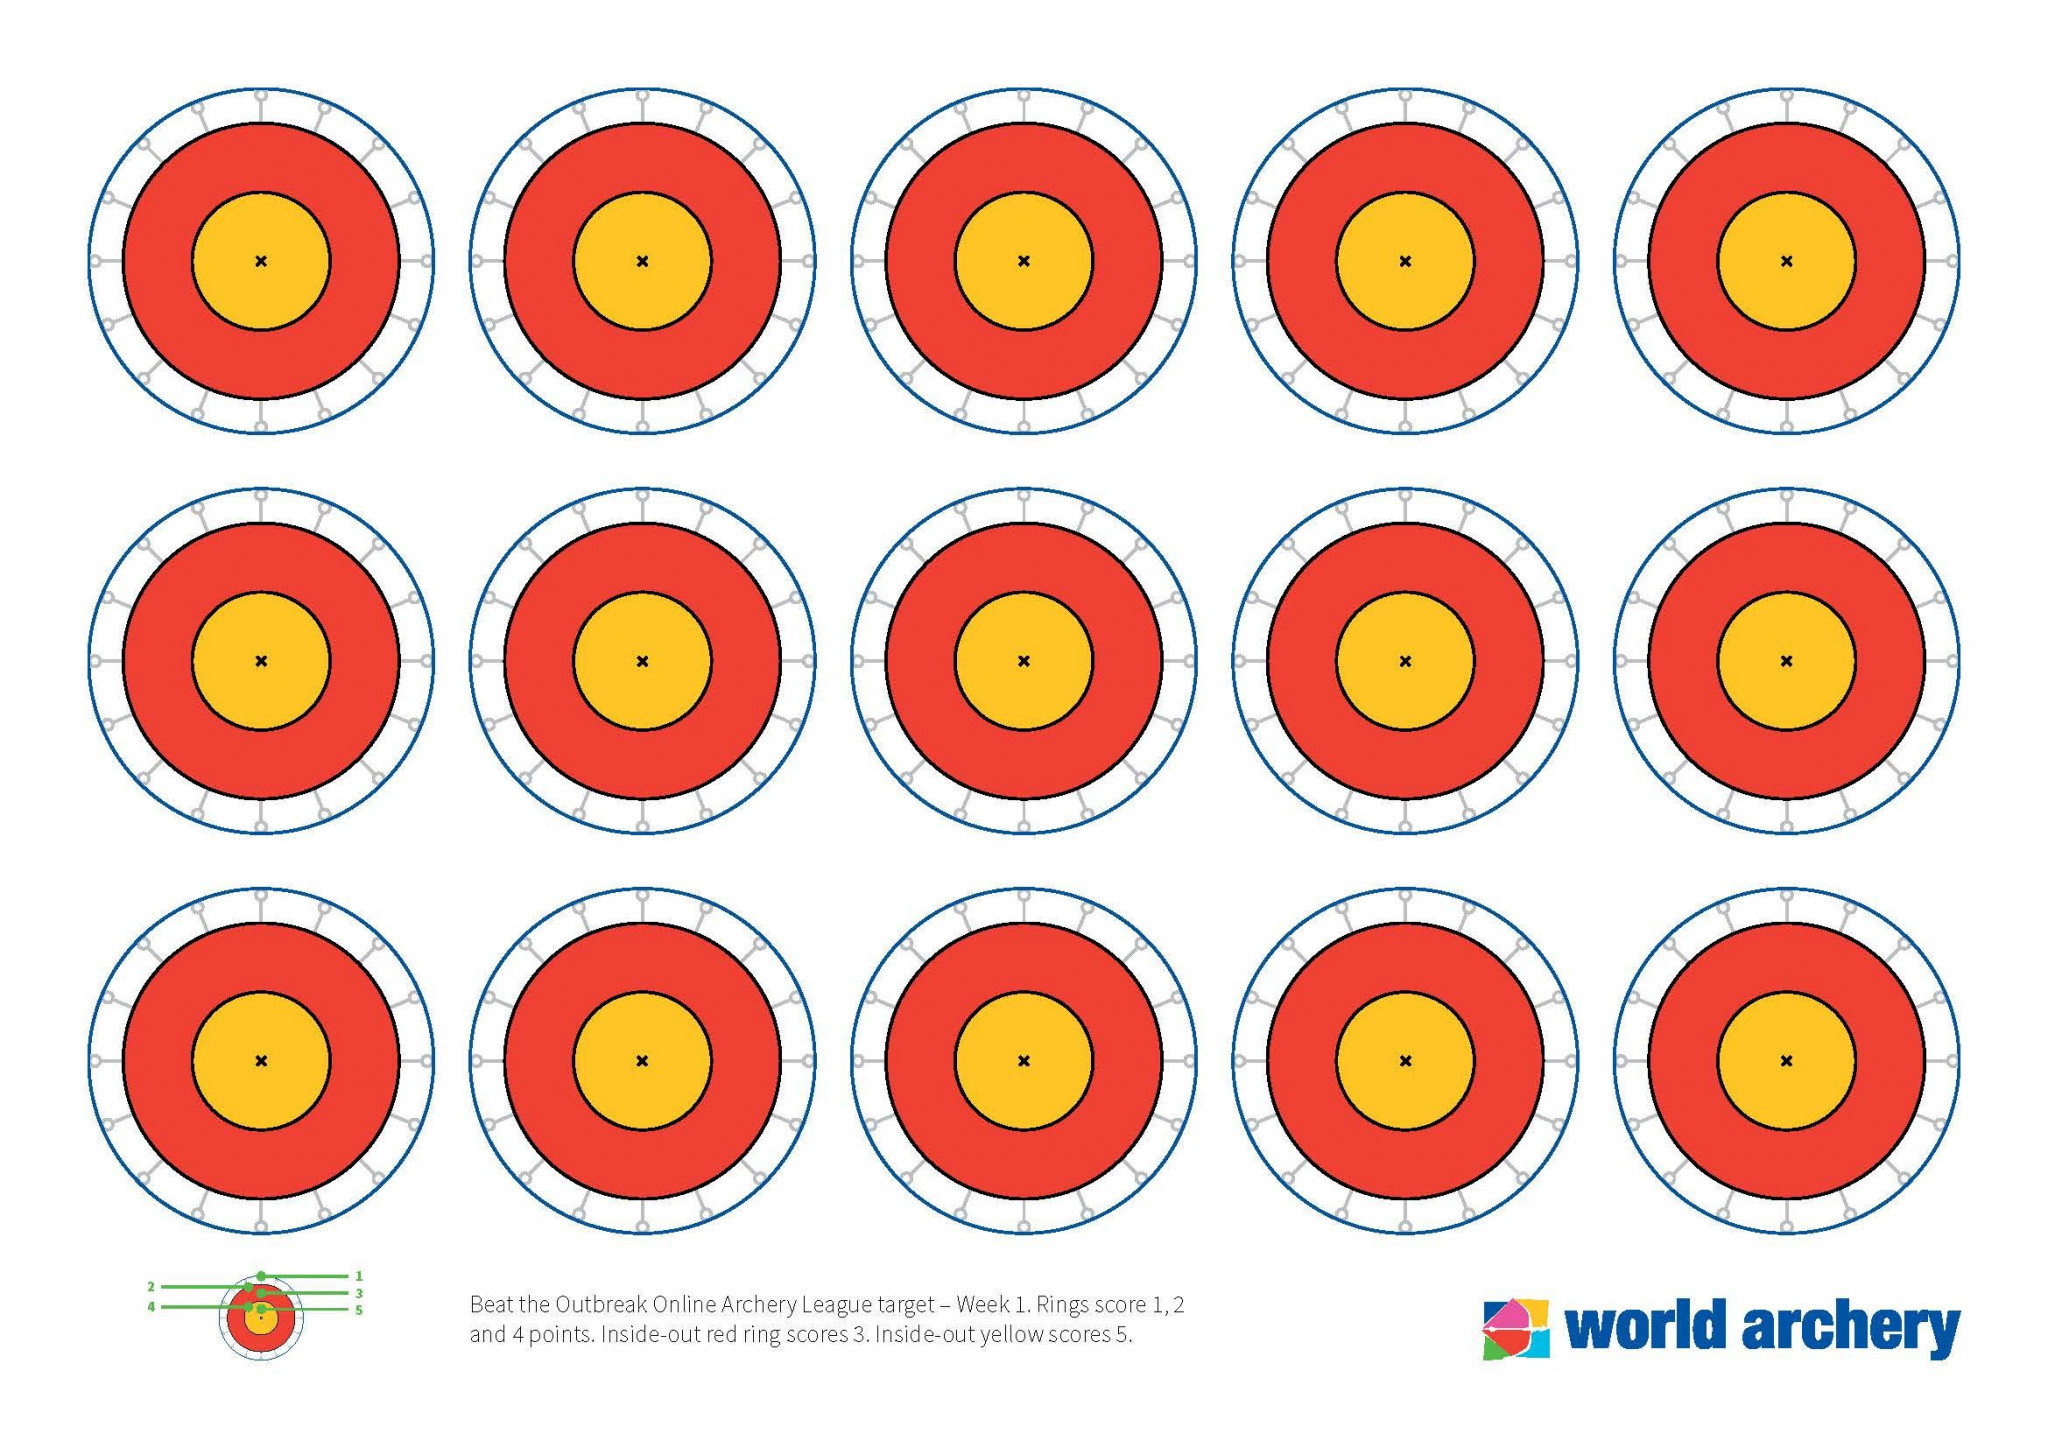 world archery launches online league during coronavirus outbreak